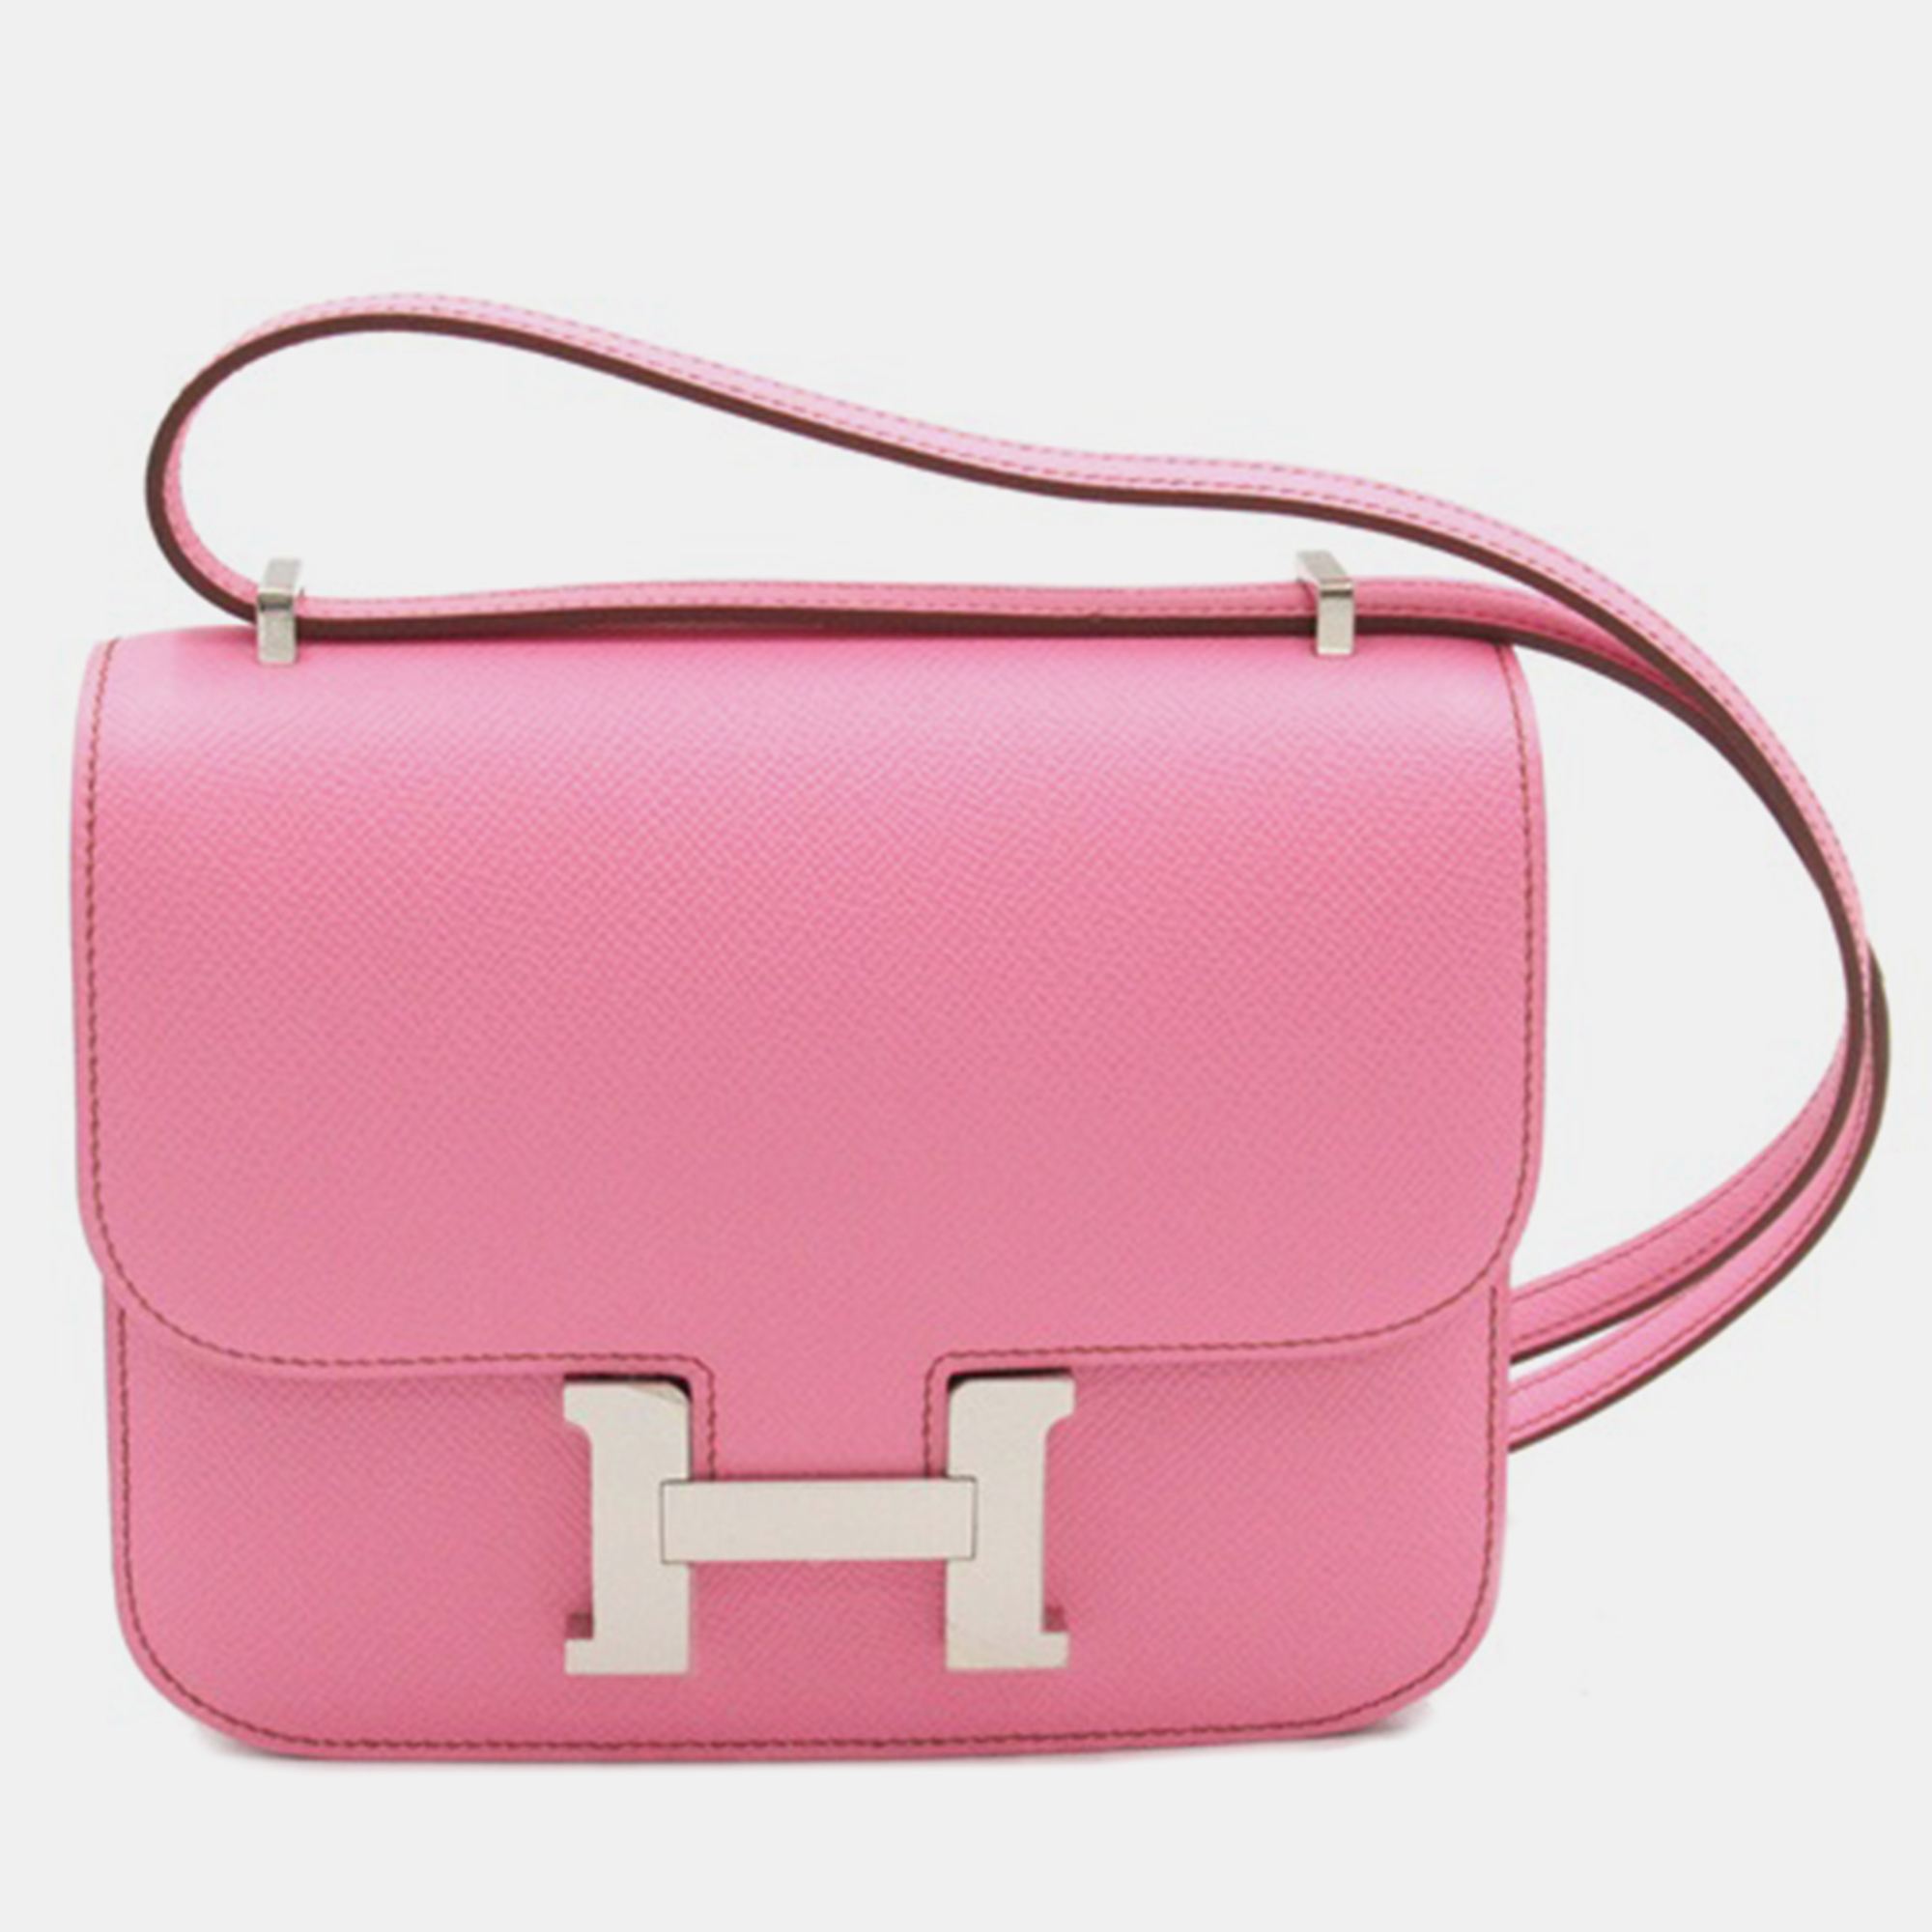 Hermes pink epsom leather mini constance bag